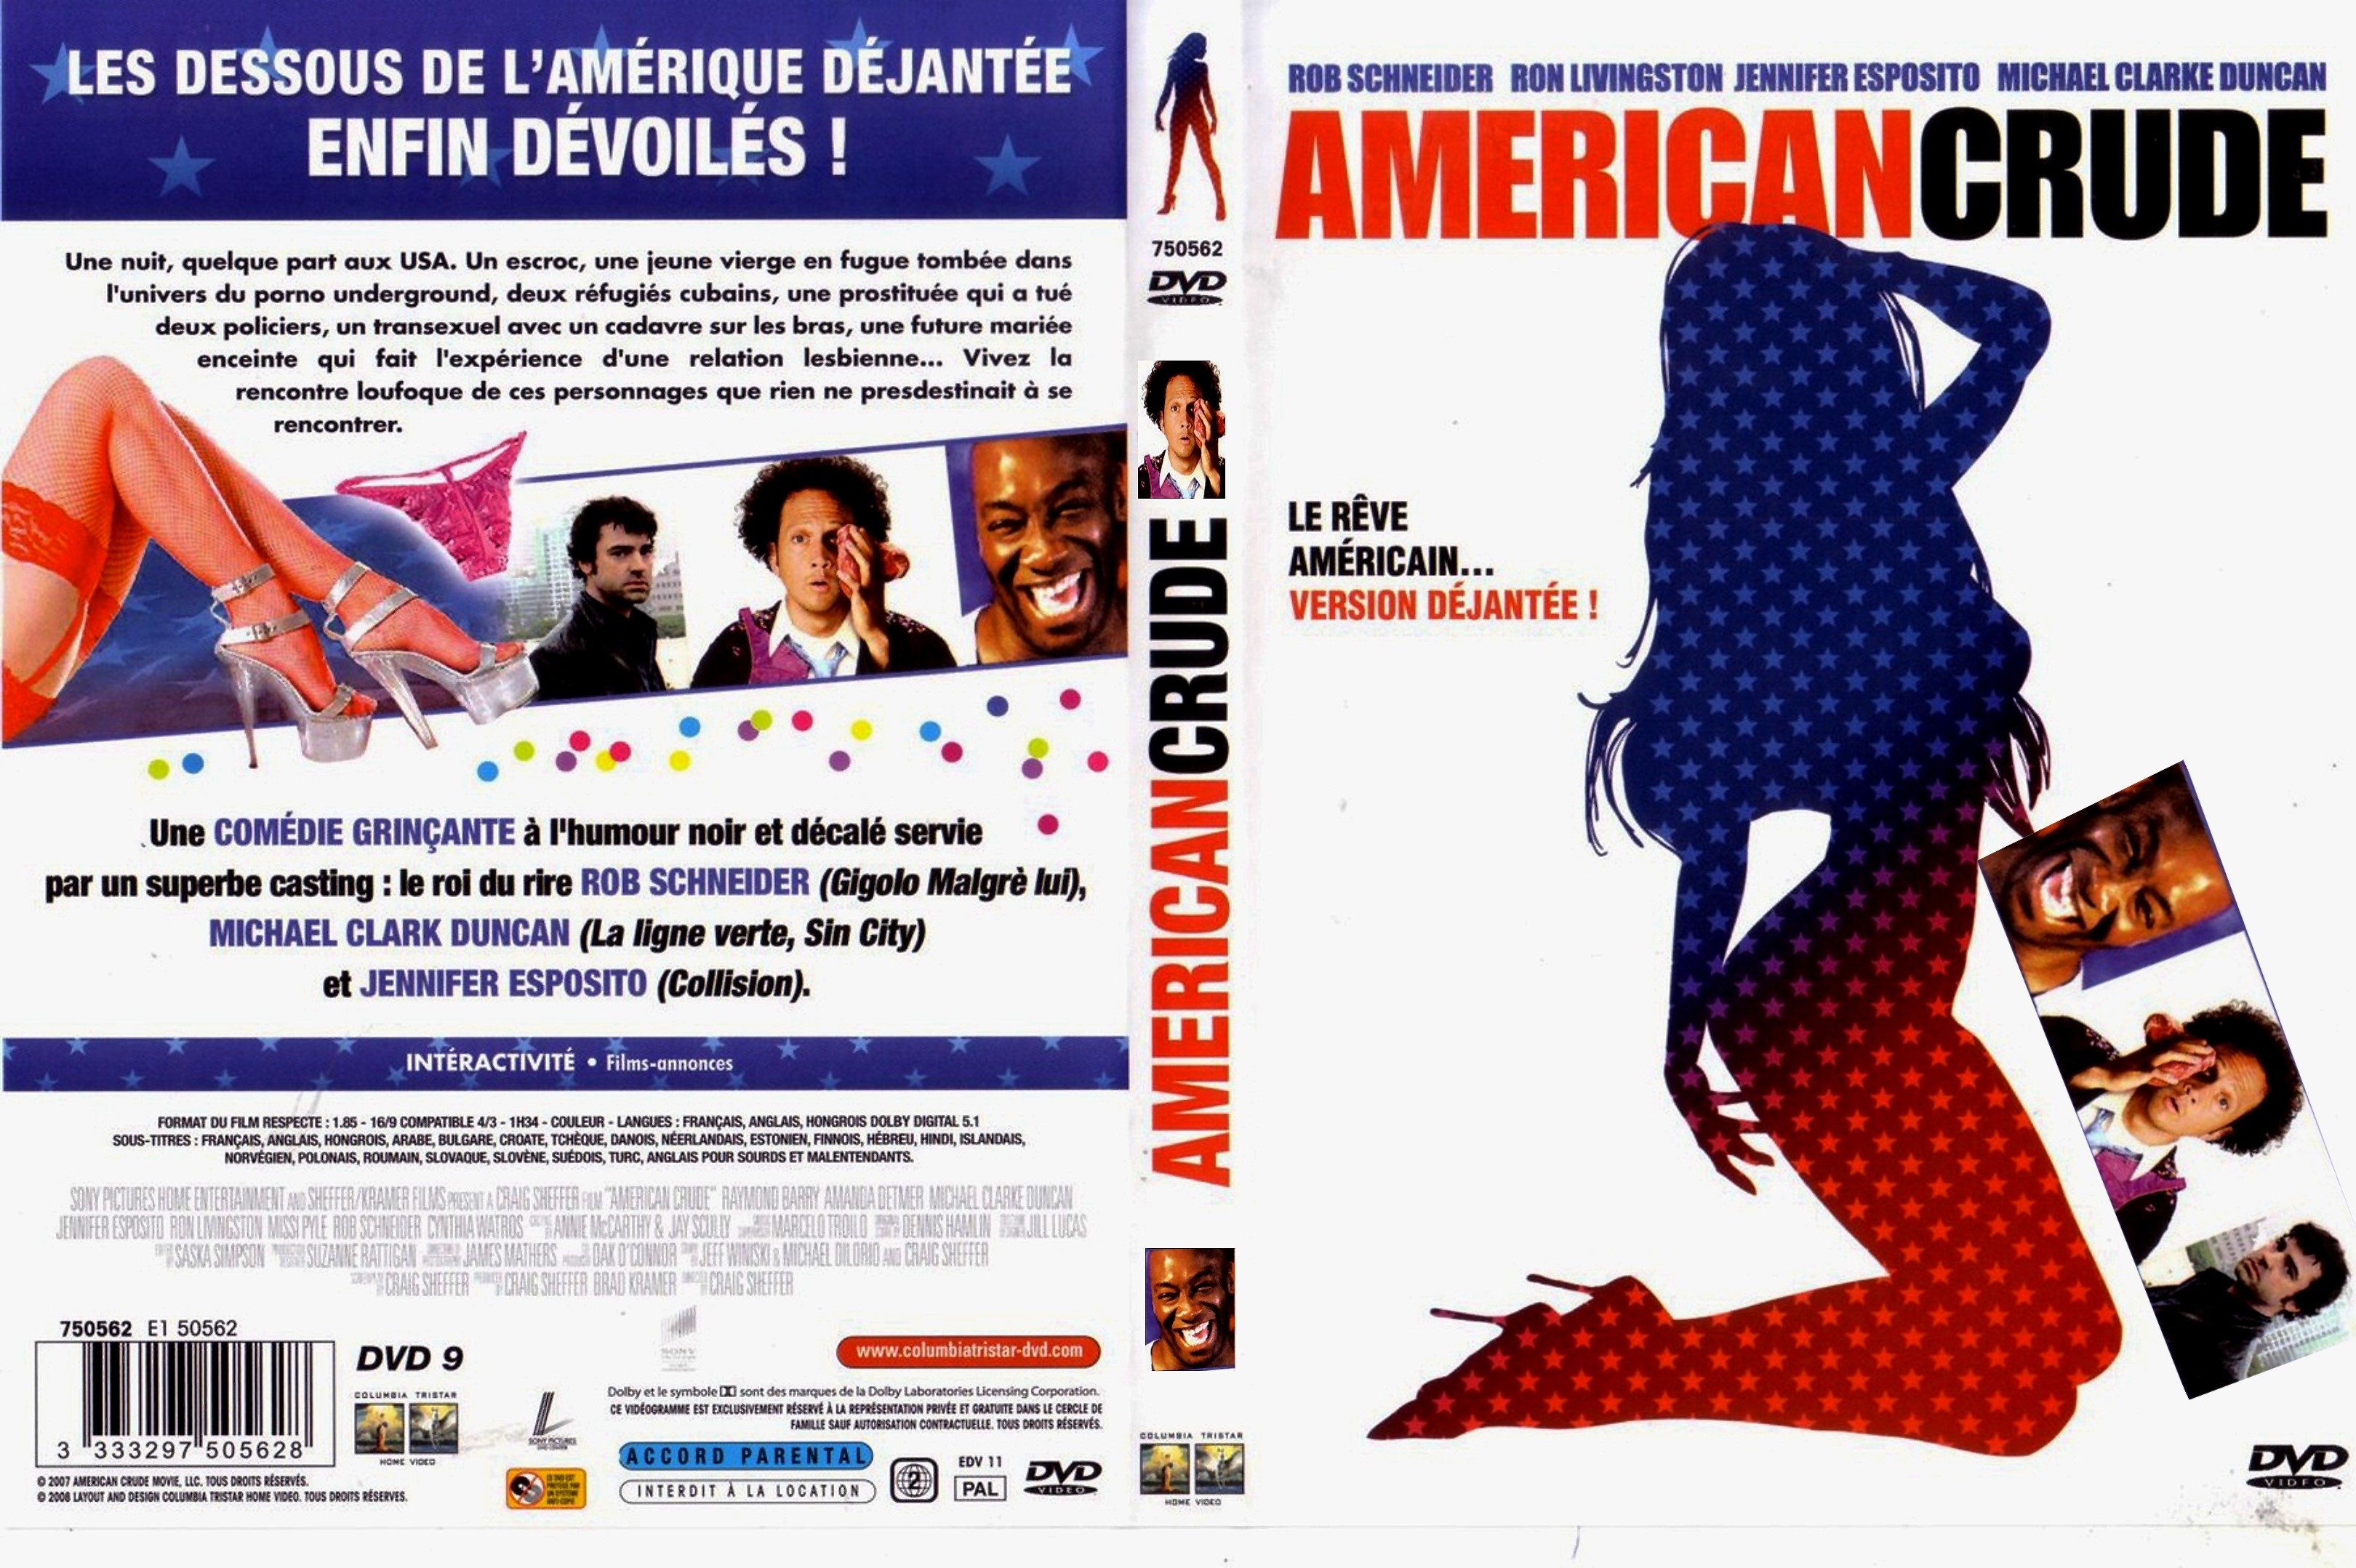 Jaquette DVD American crude